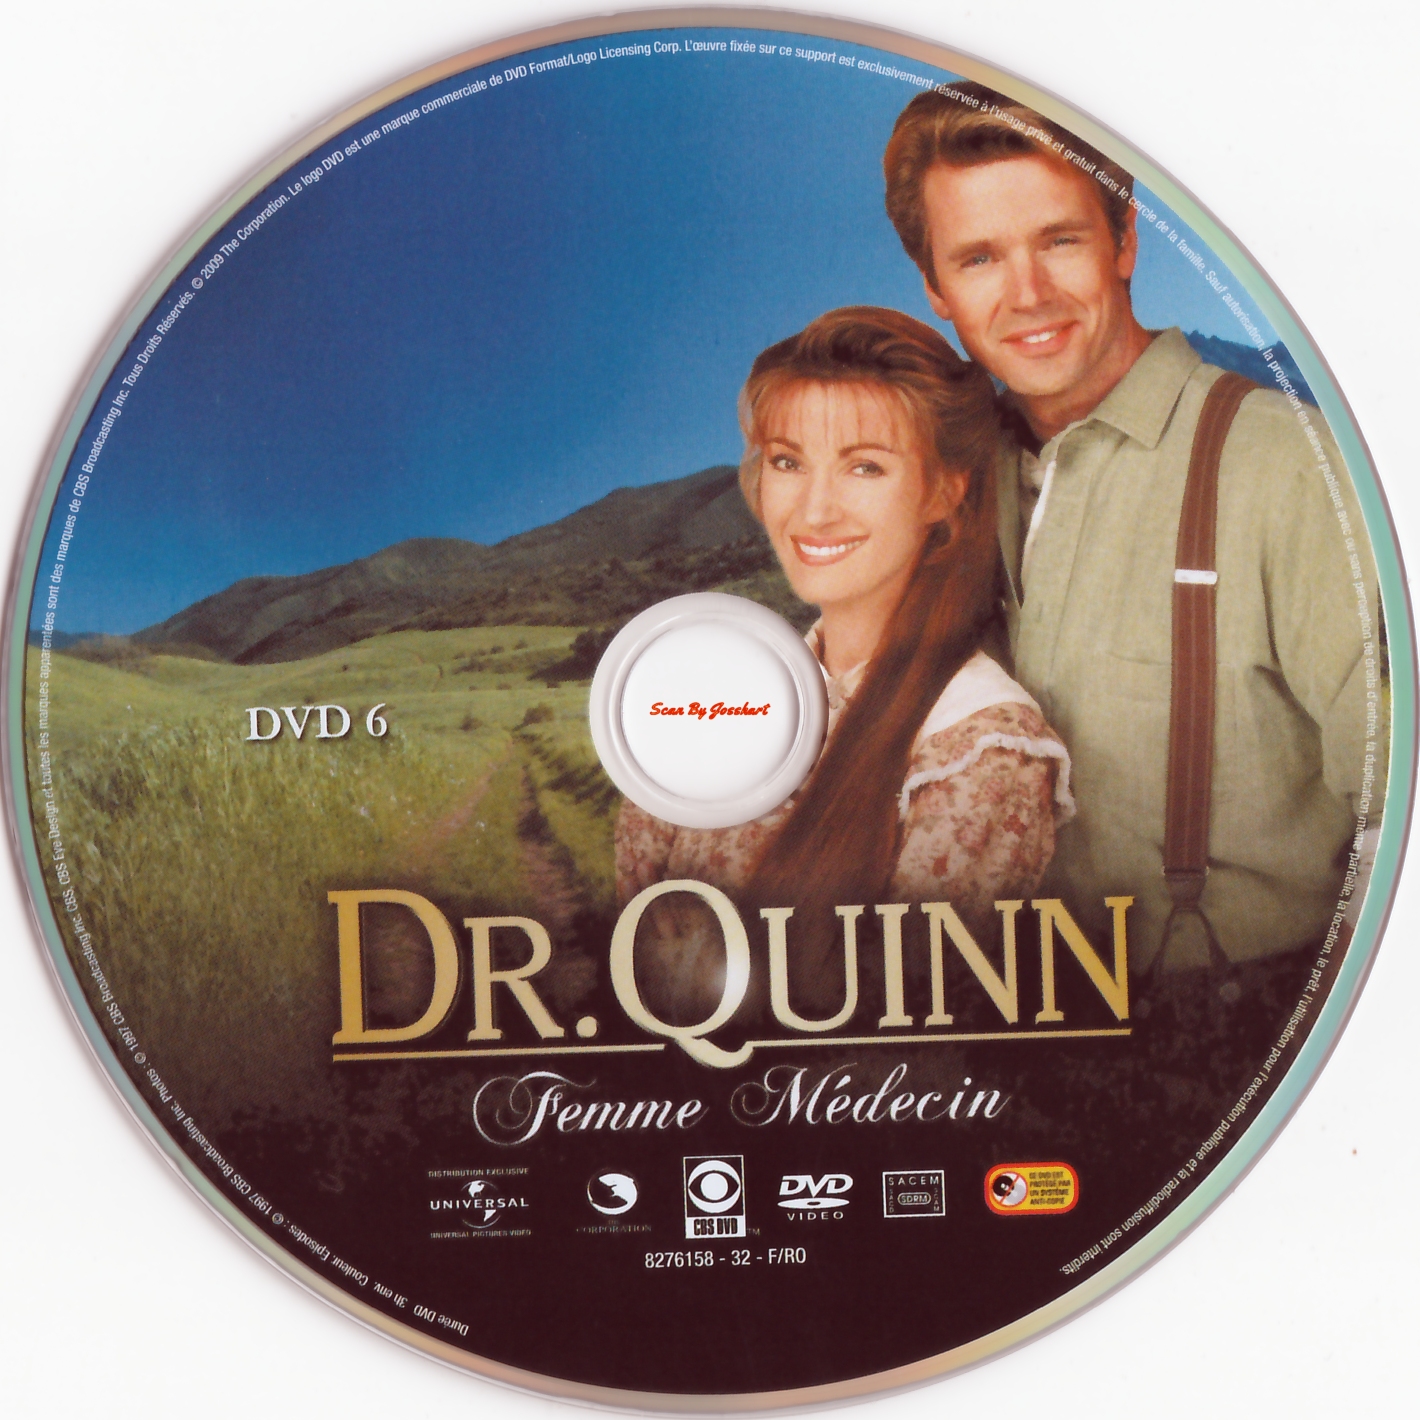 Docteur Quinn femme mdecin - Integrale Saison 5 DISC 6